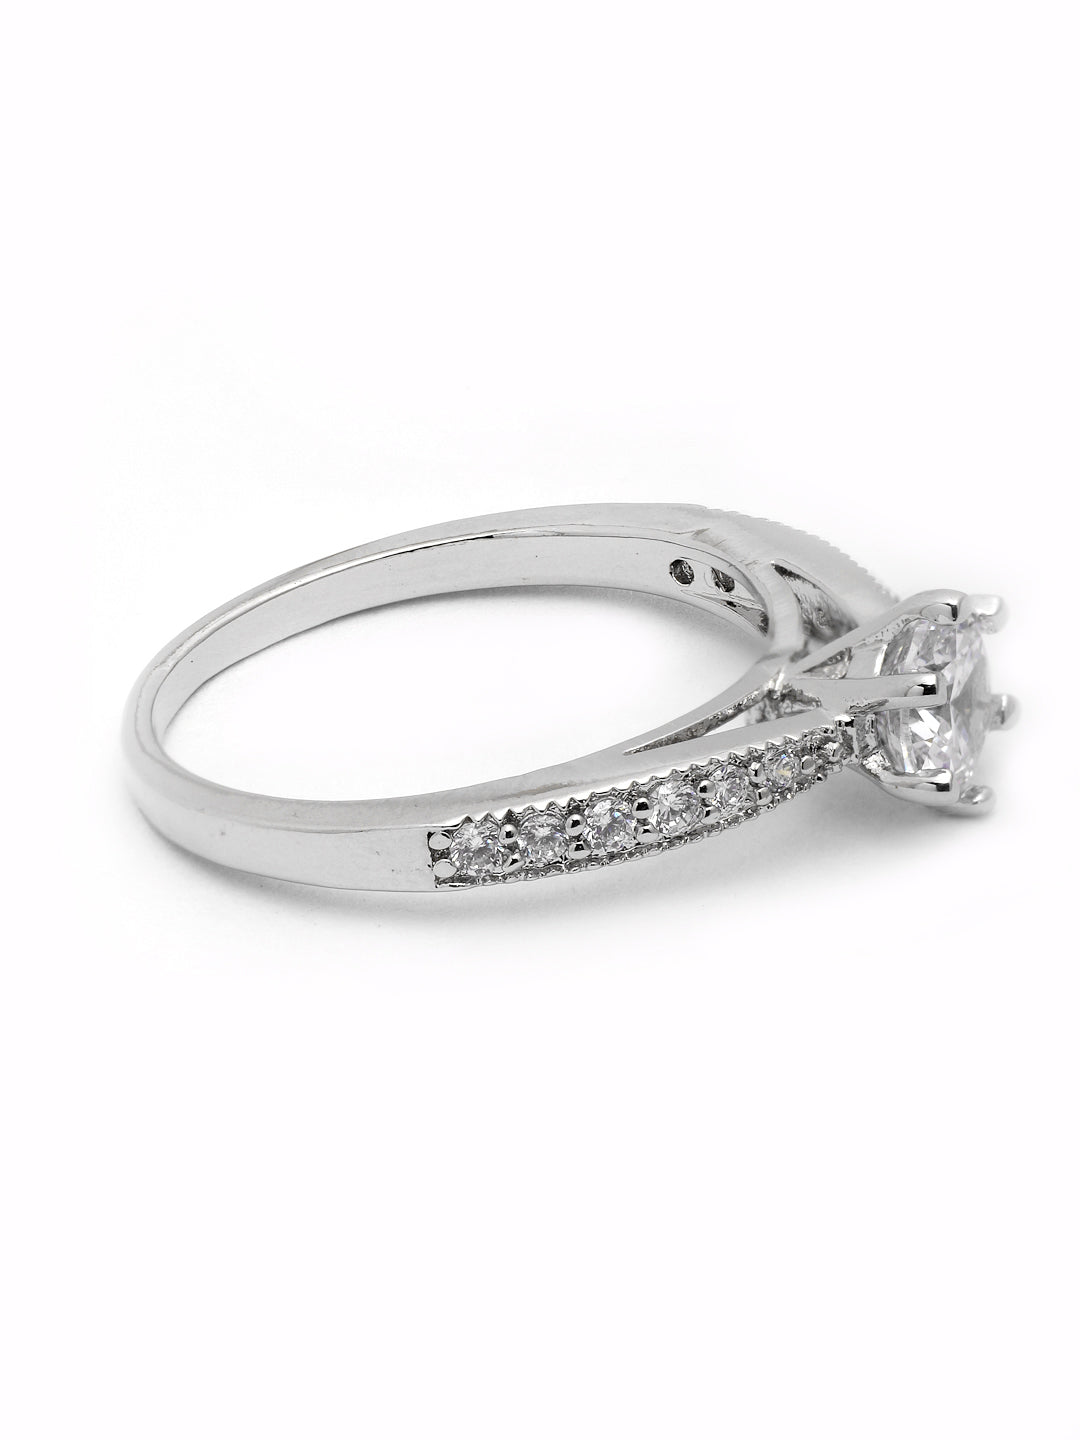 Cheap New Creative Korean Fashion Women Finger Rings Stylish Accessories  Dazzling White CZ Stone High Quality Female Jewelry Ring | Joom